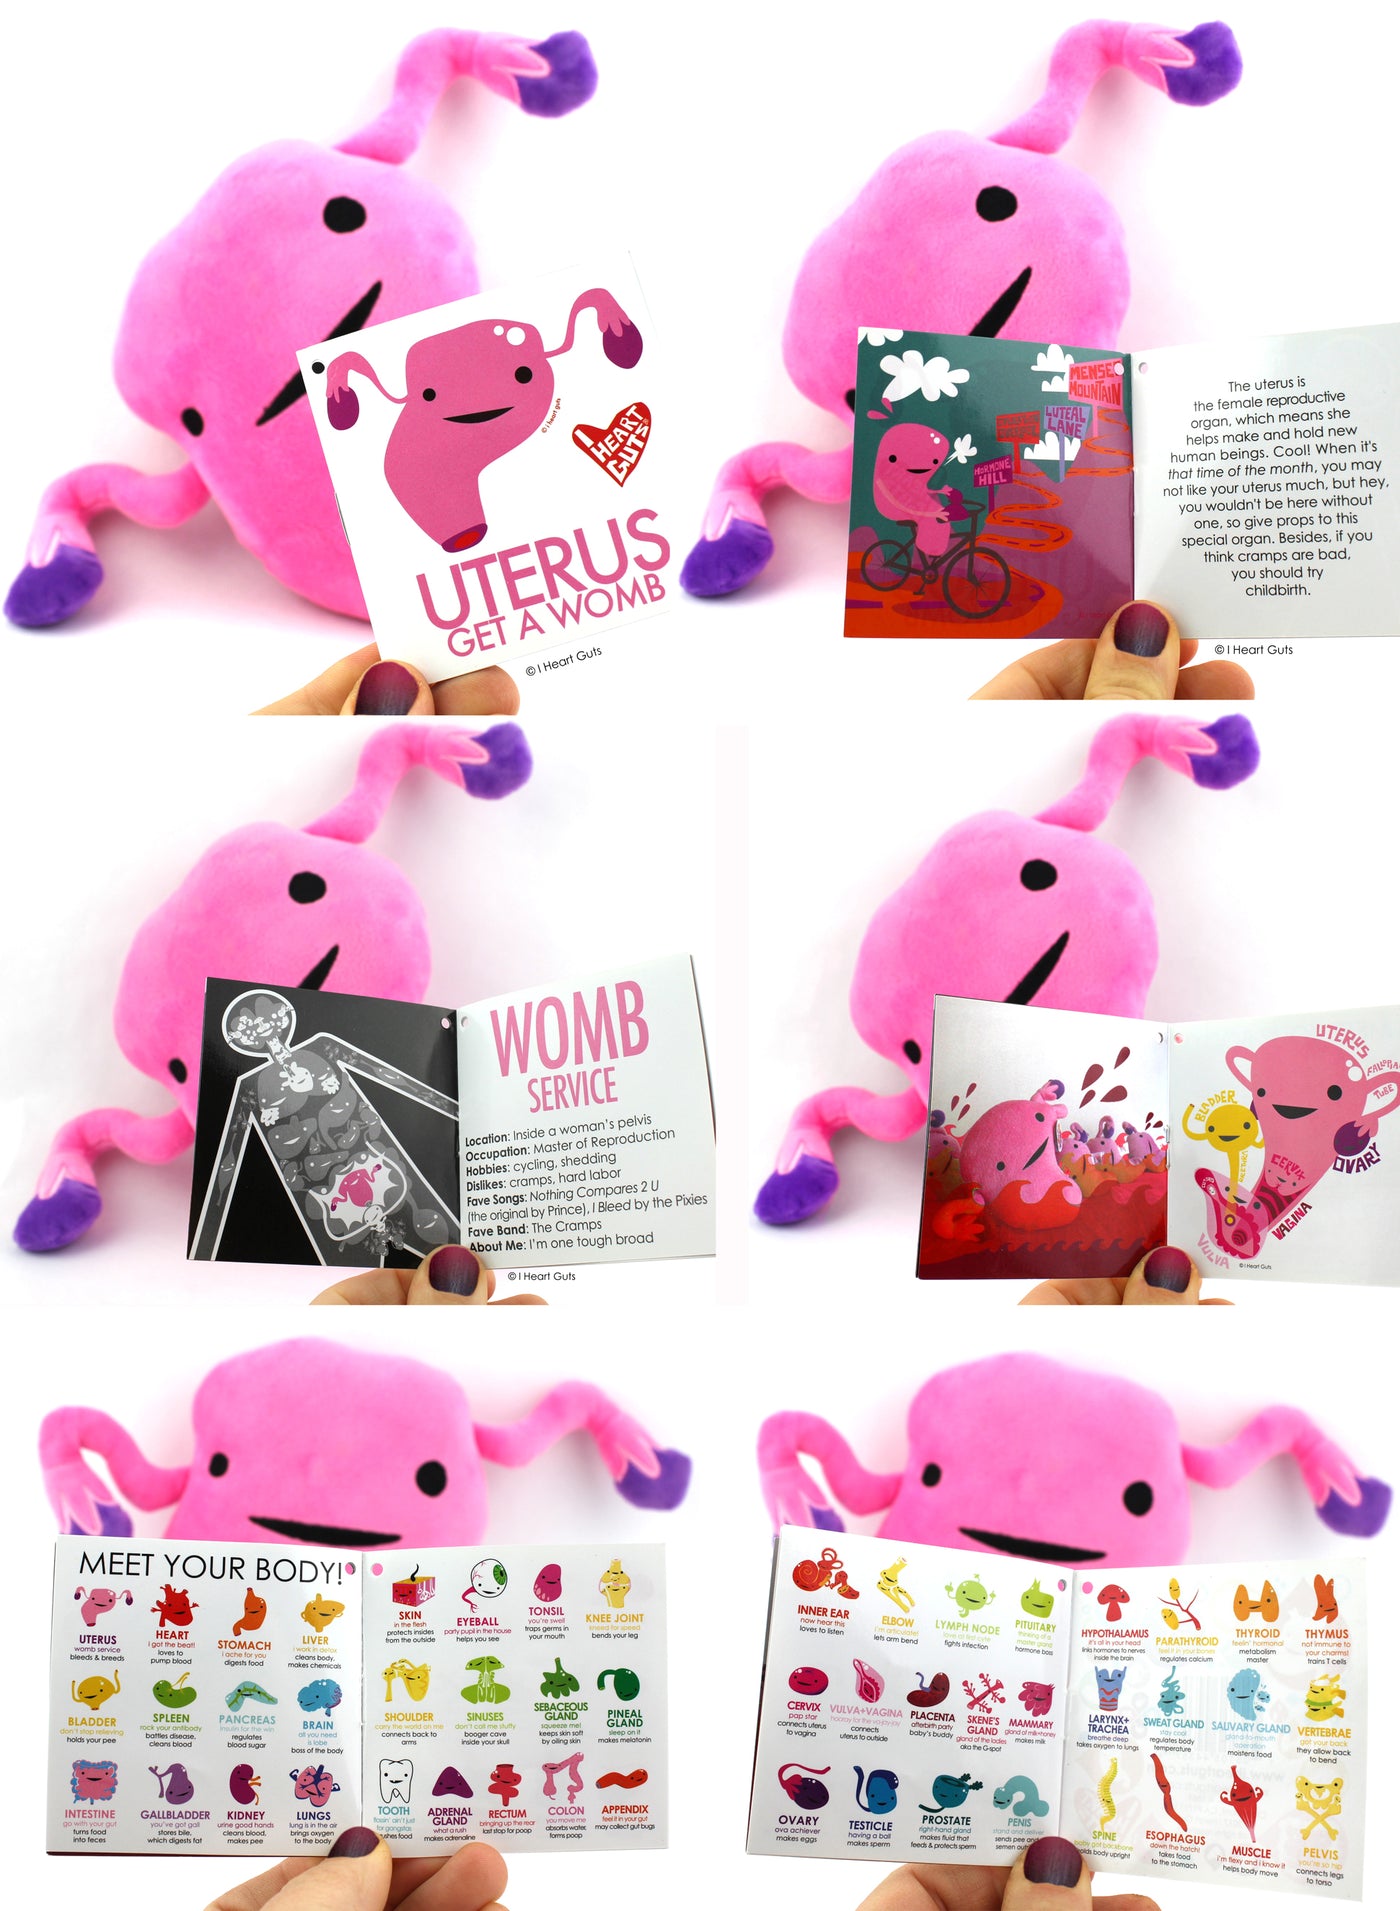 Uterus Plush - Womb Service! - Plush Organ Stuffed Toy Pillow - I Heart Guts